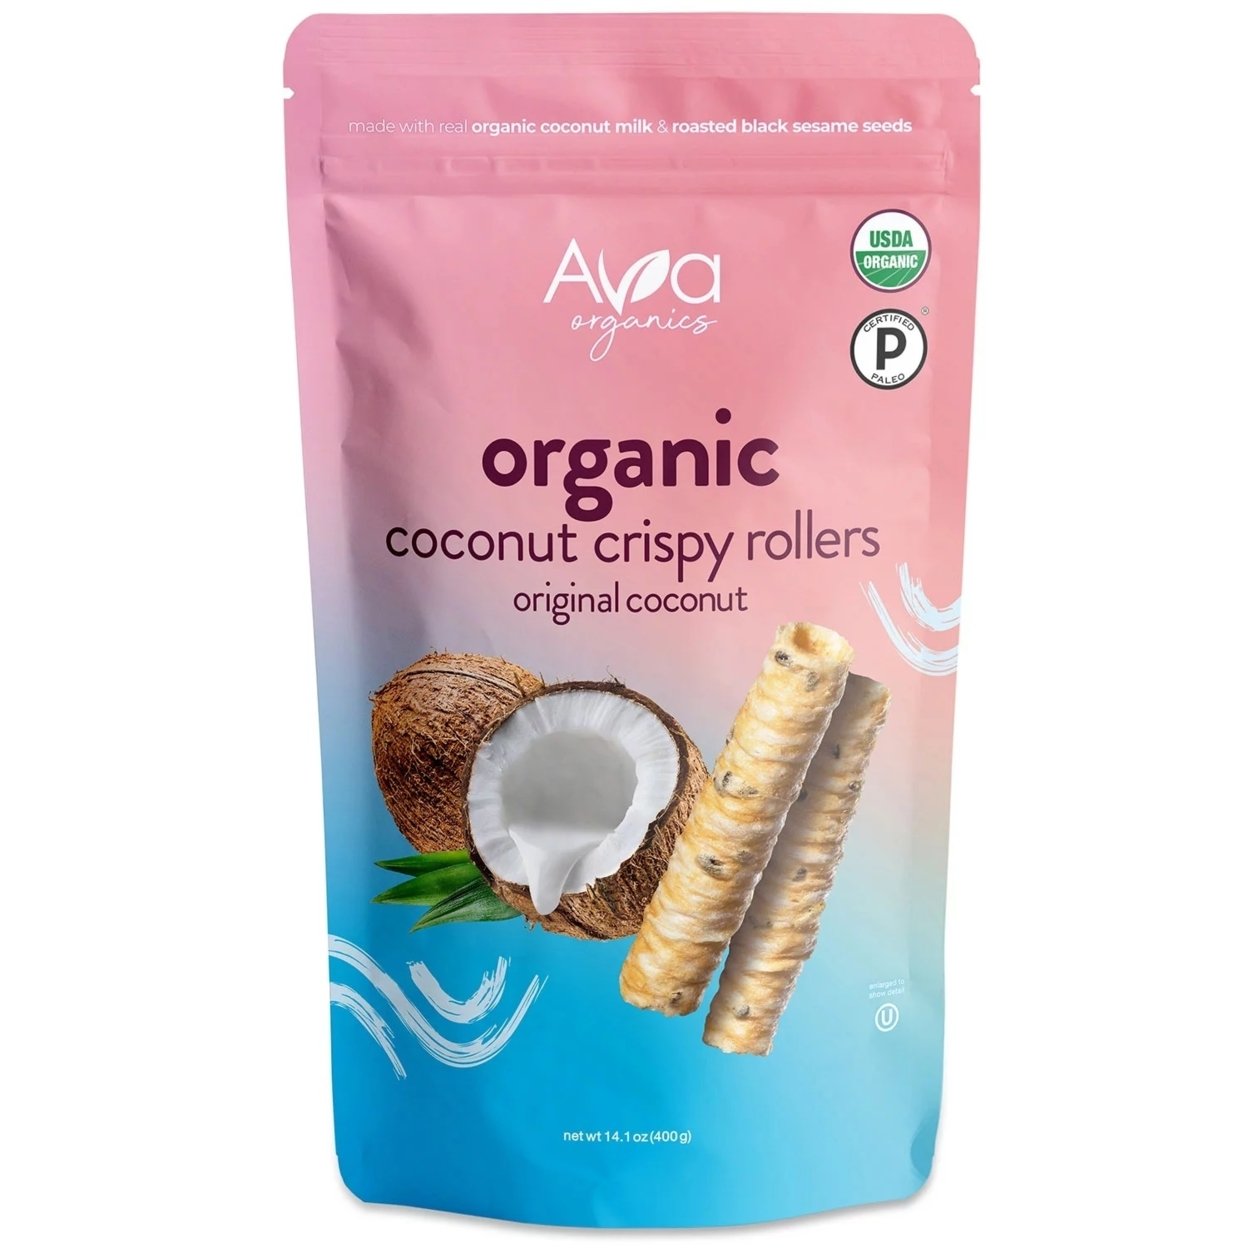 Ava Organic Coconut Crispy Rollers (14.1 Ounce)